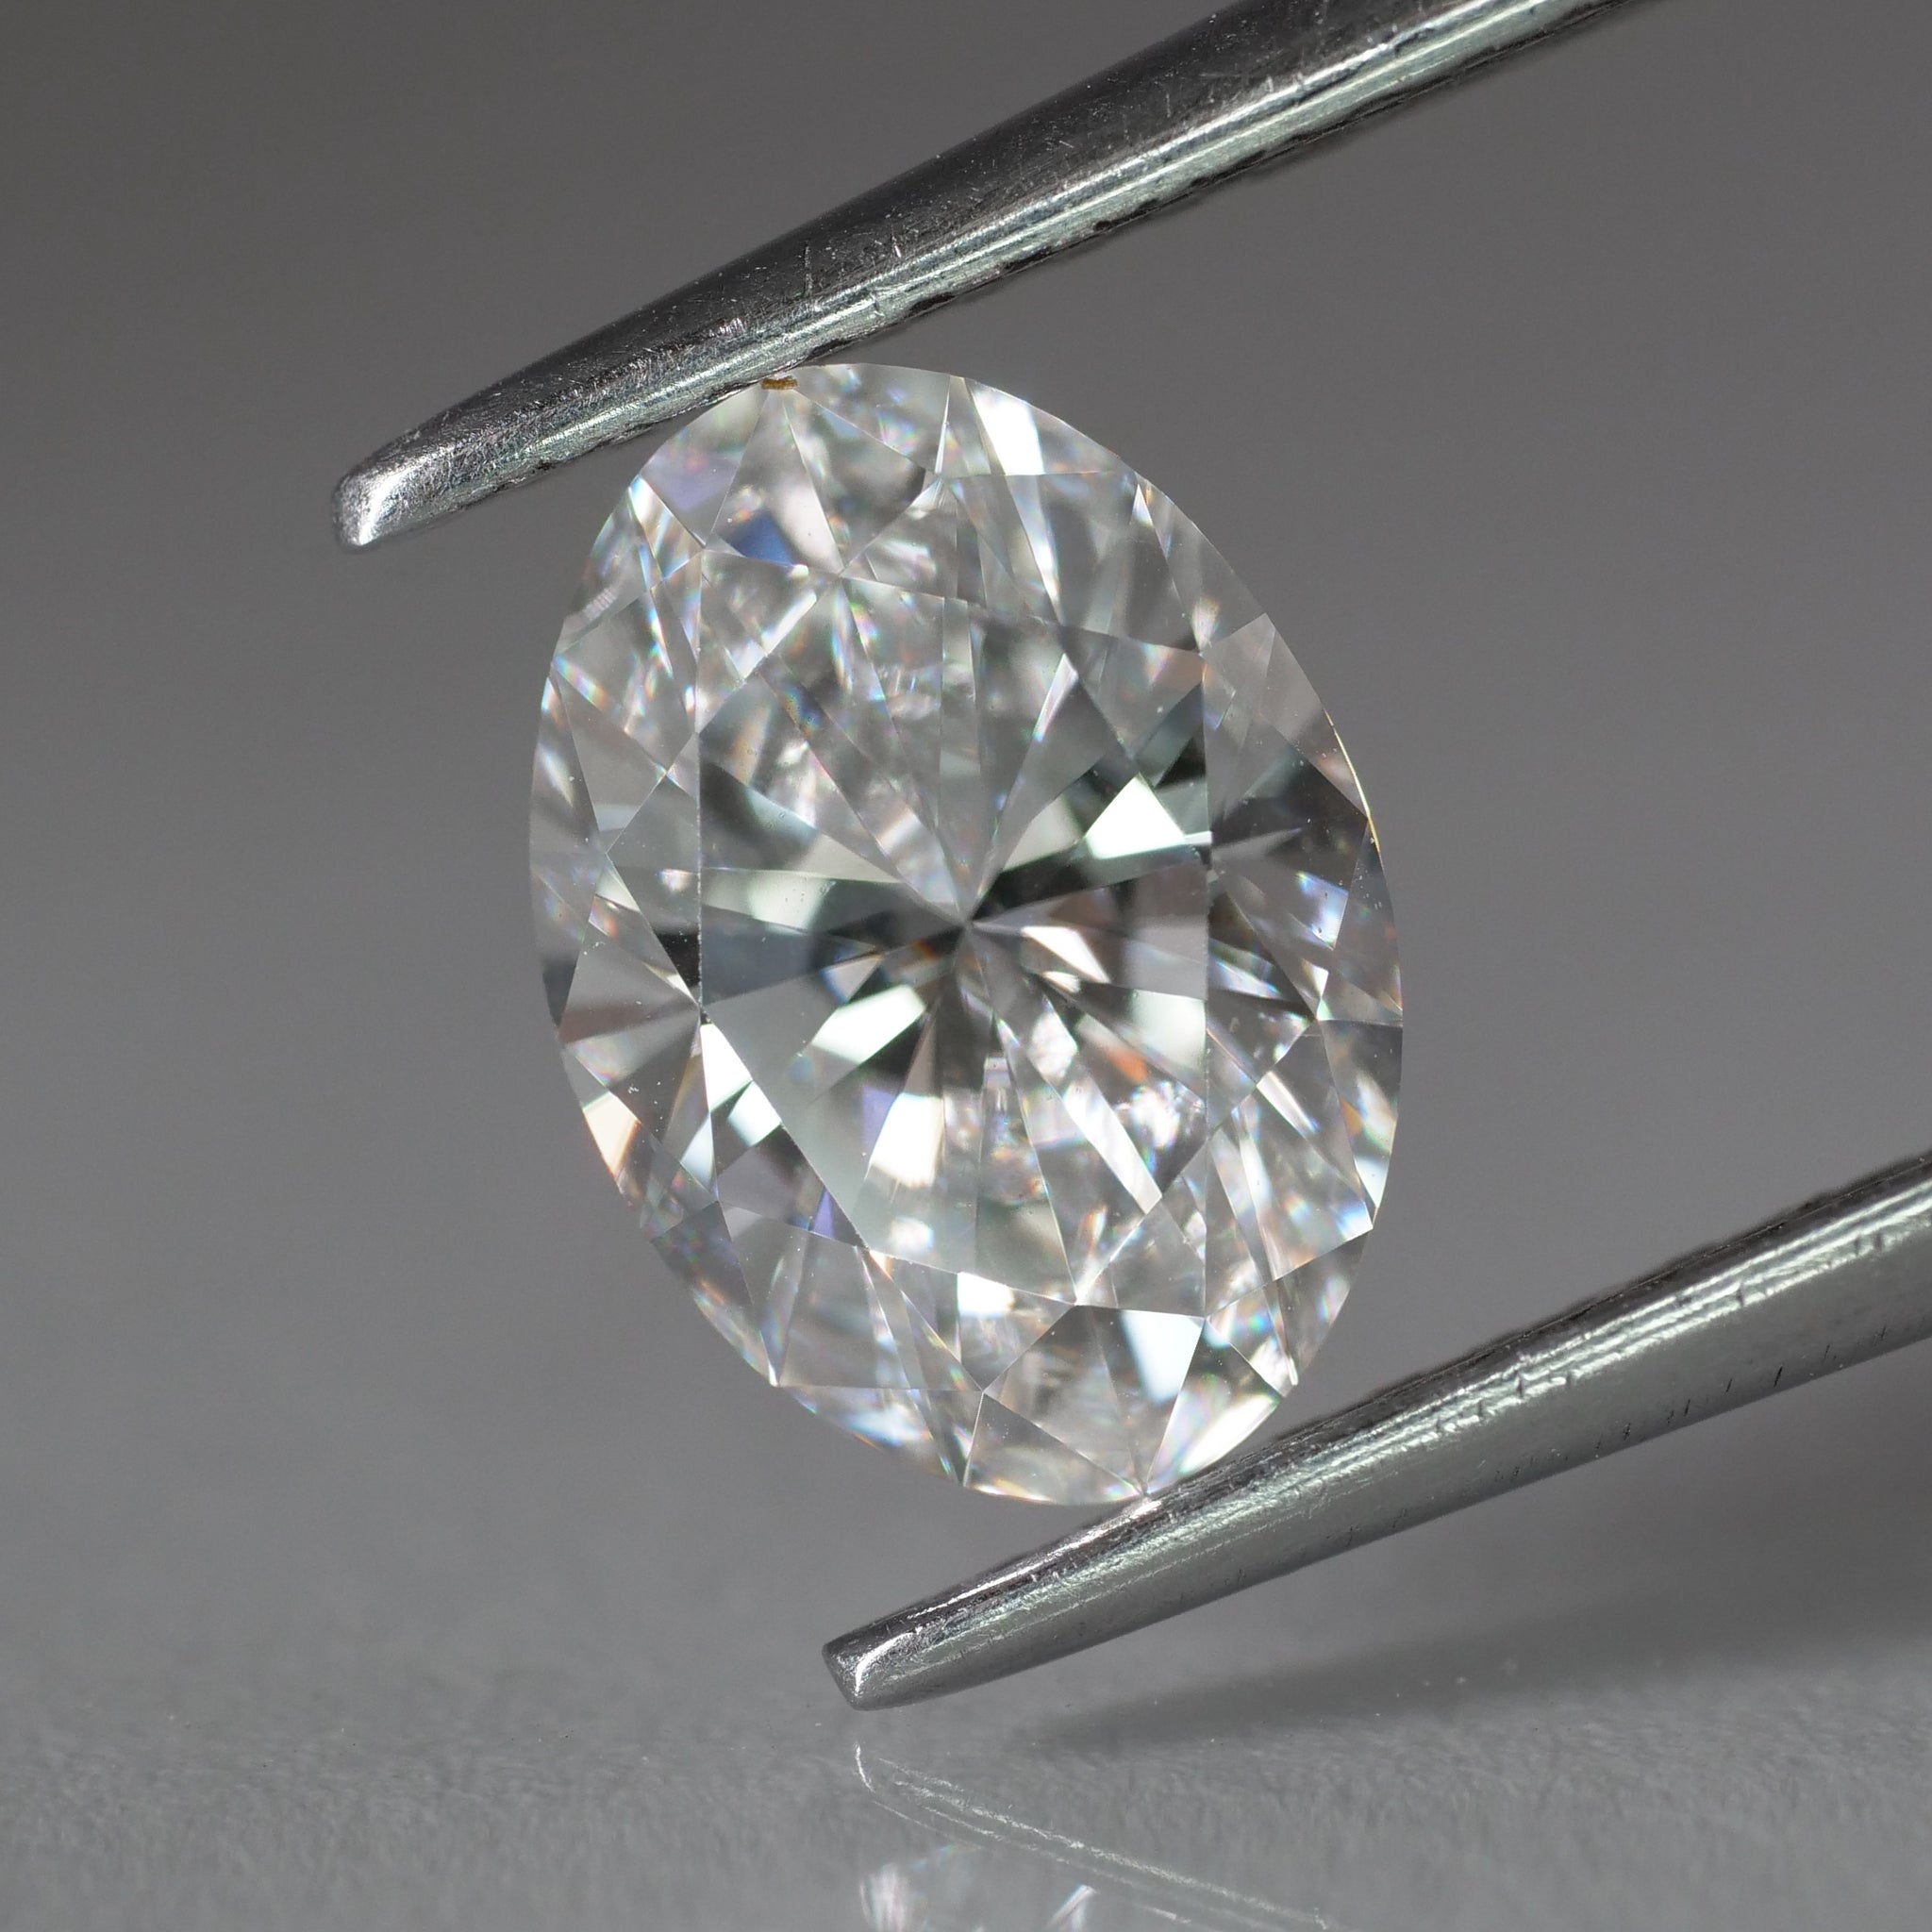 Lab grown diamond | IGI certificate, oval cut 8x6mm*, F color, VS, 1.31 ct - Eden Garden Jewelry™